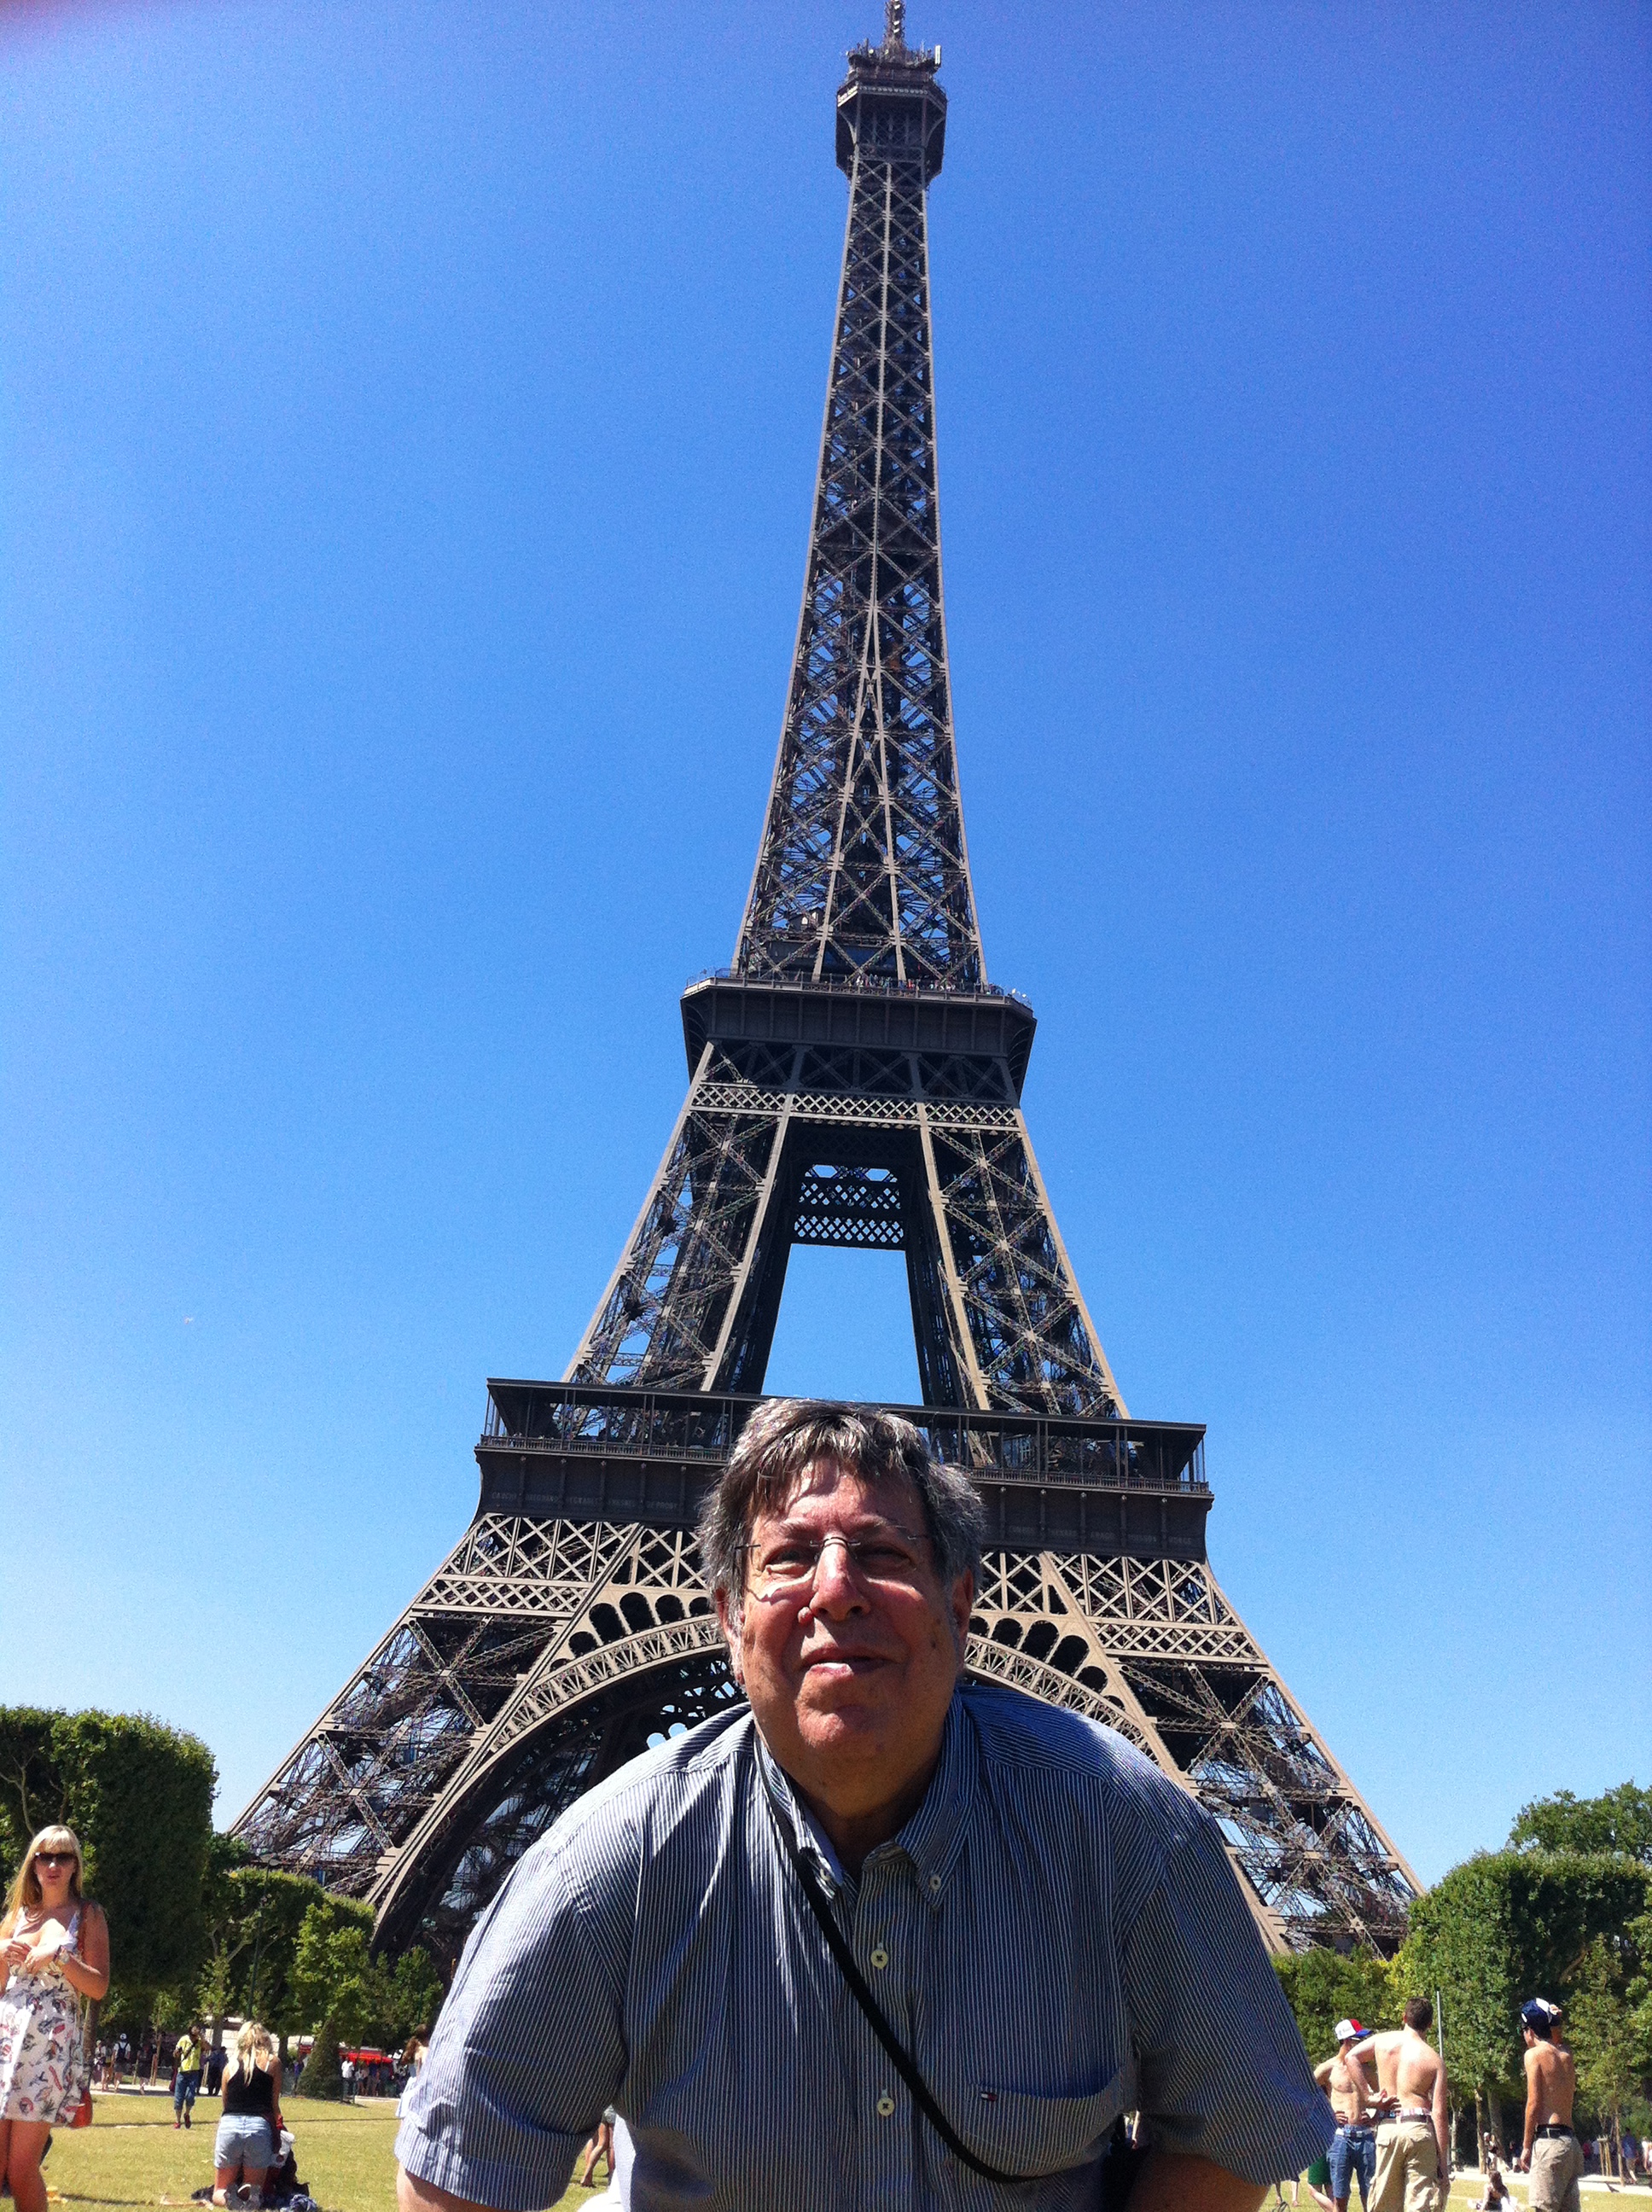 Looks like me at the Eifel Tower